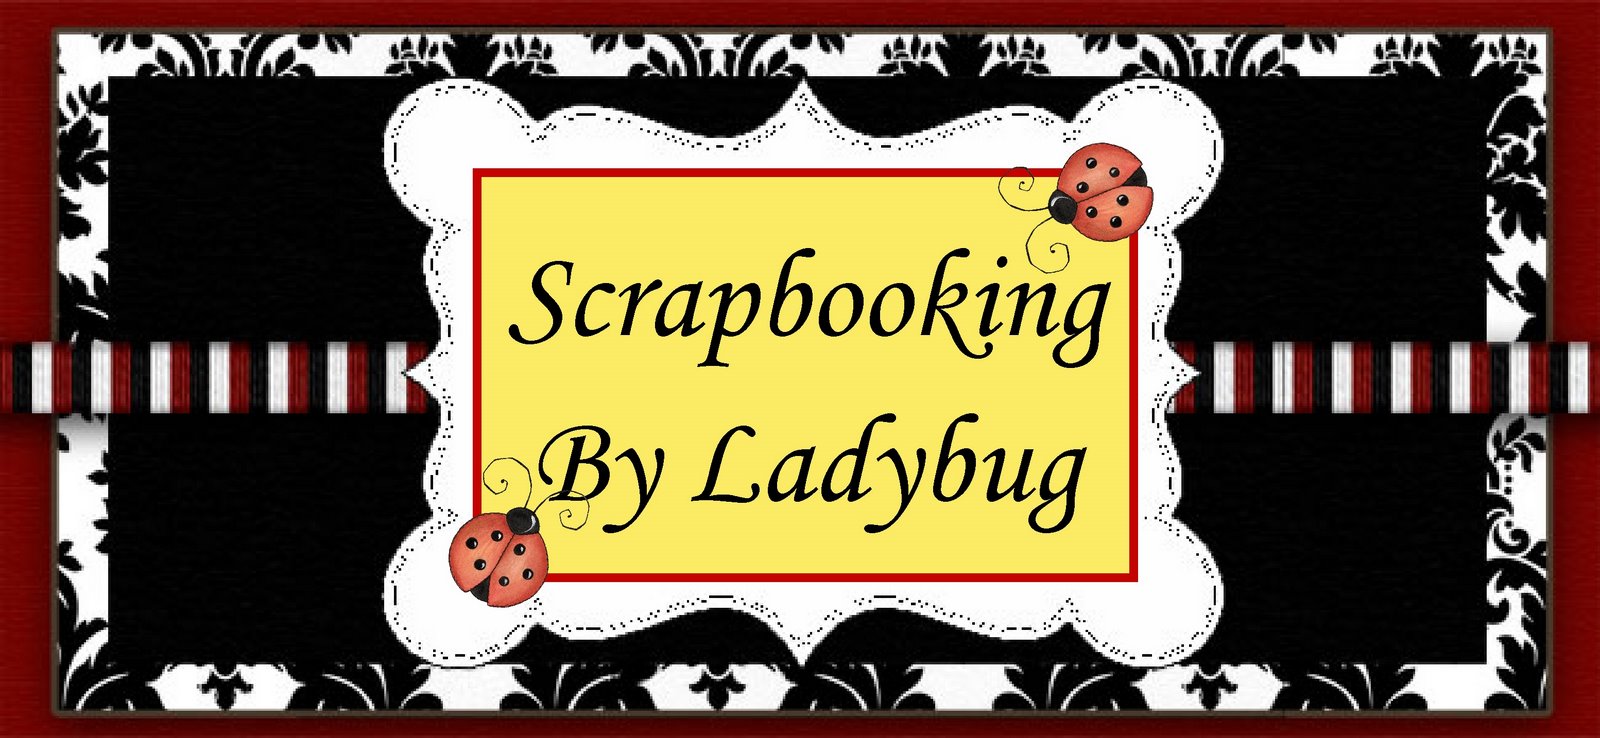 Scrapbooking By Ladybug